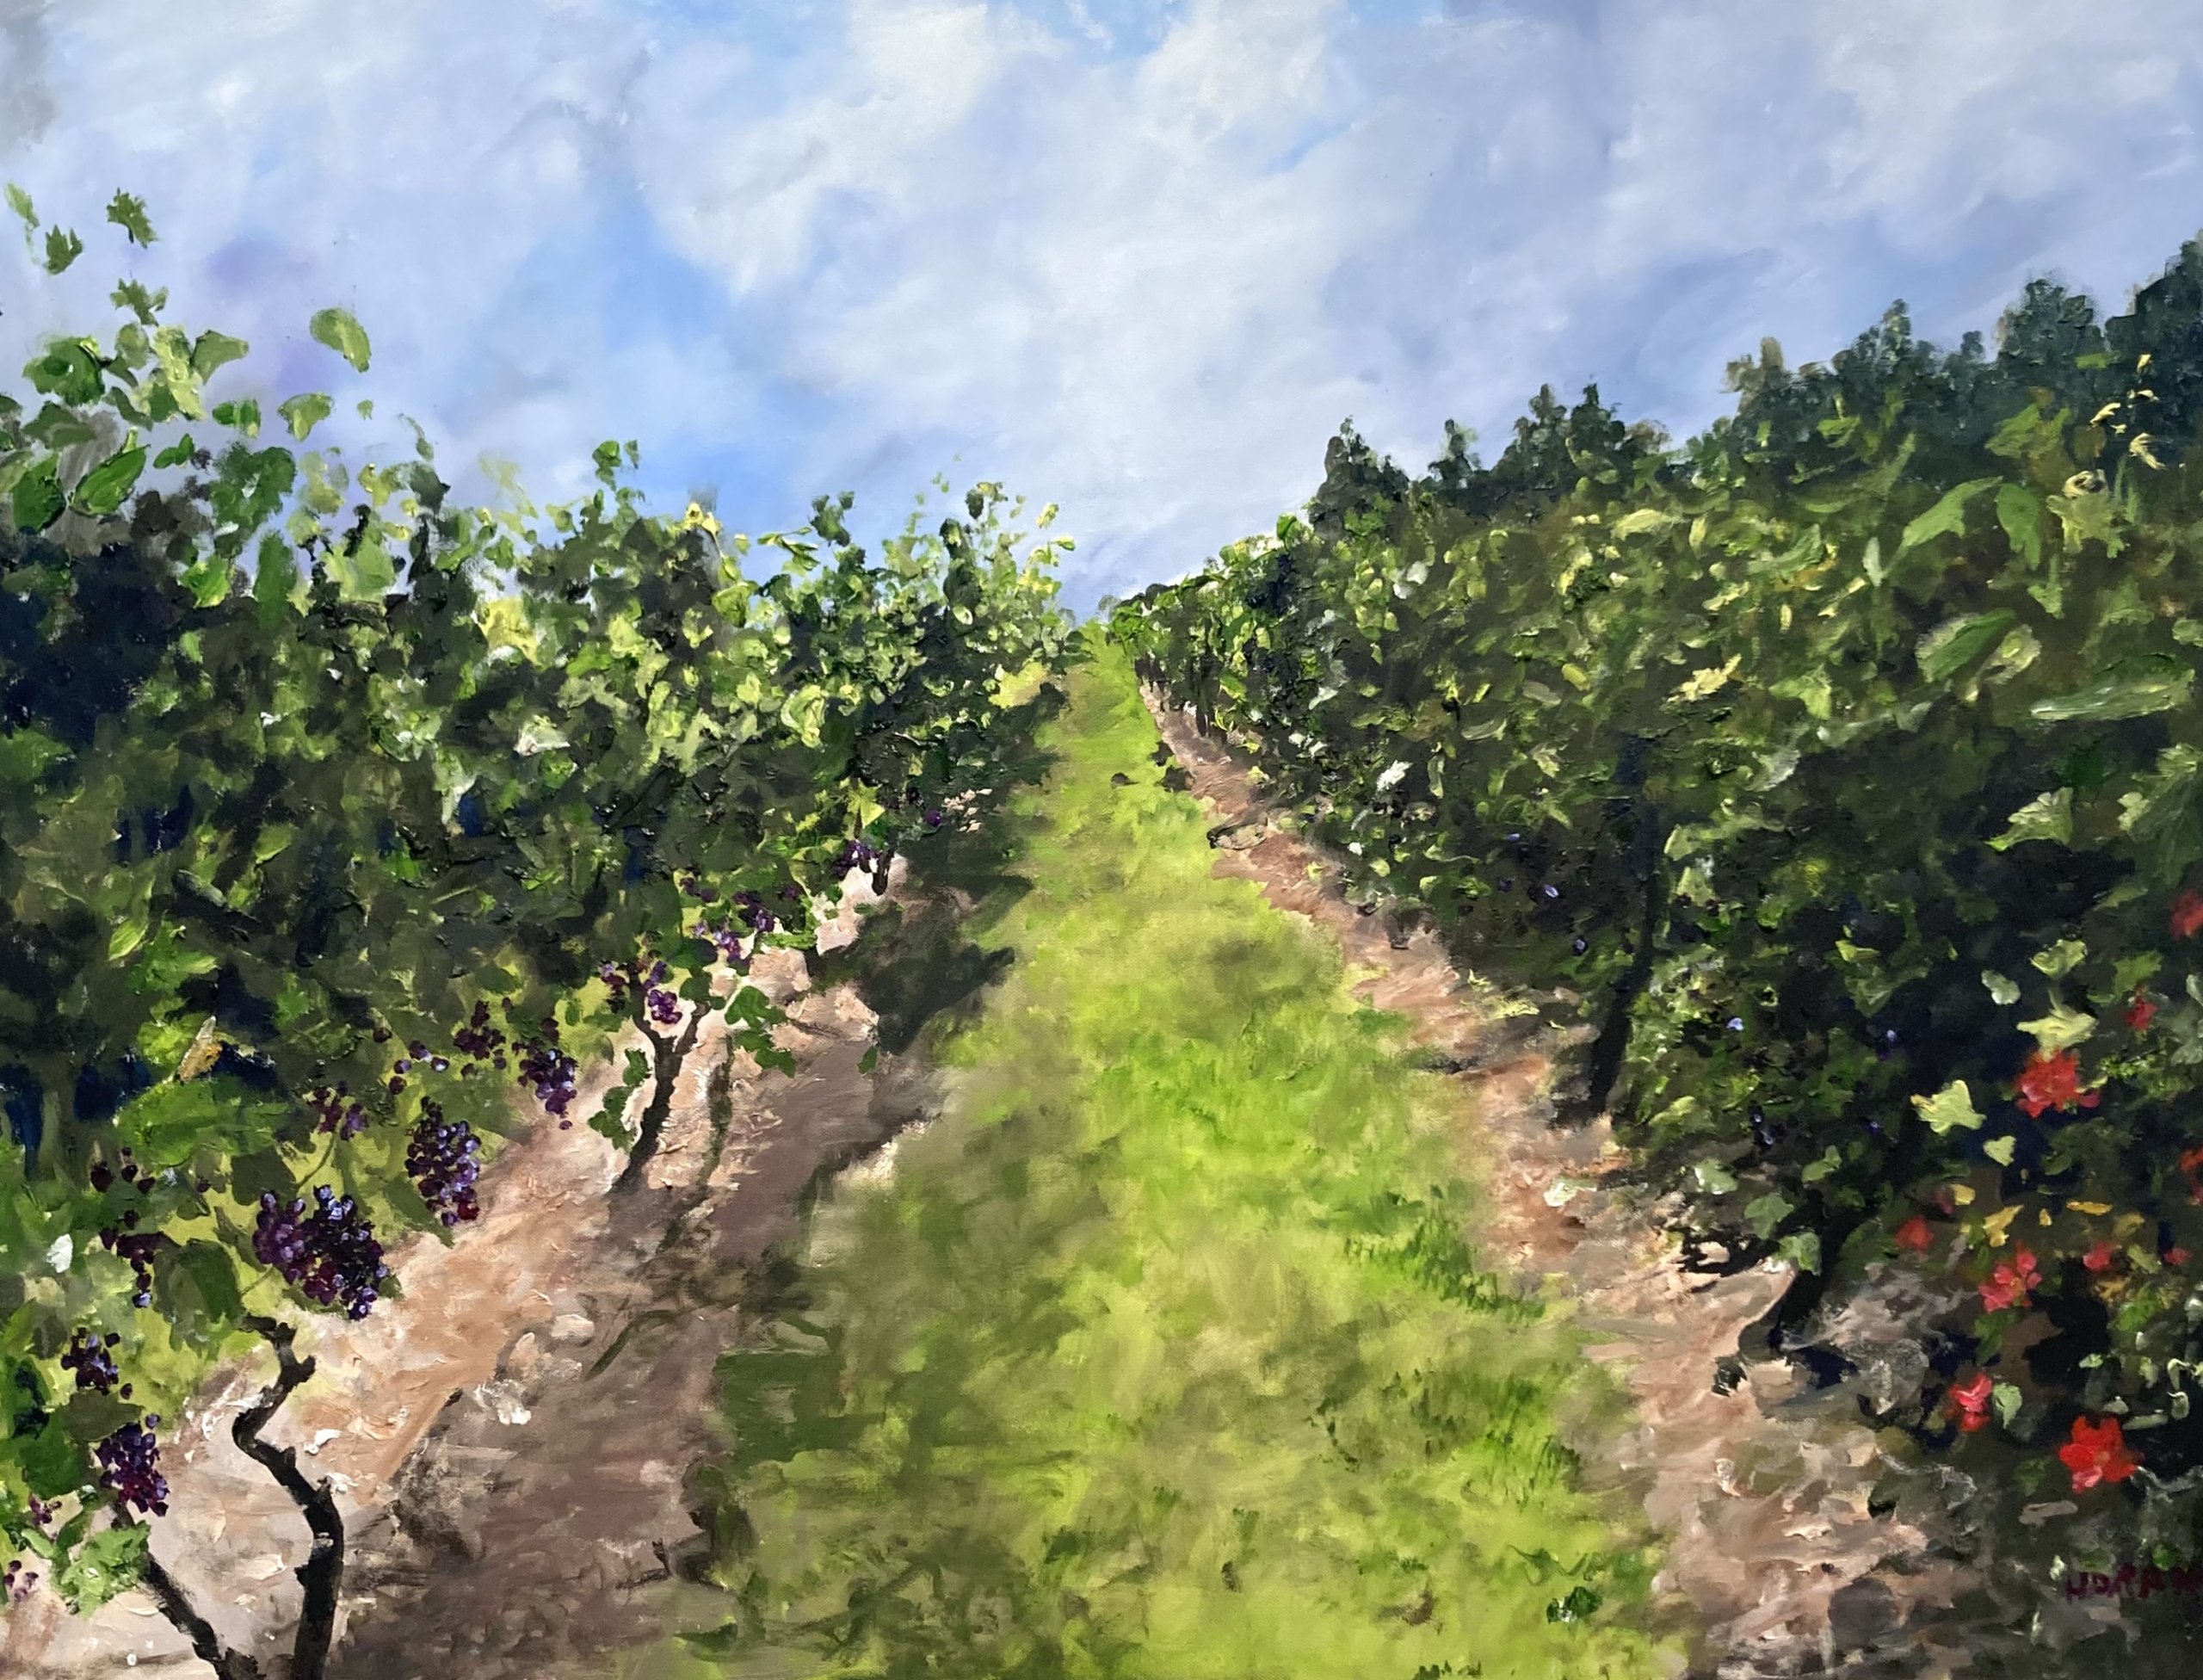 "A Walk in the Vineyard" by Isabelle Haran-Leonardi